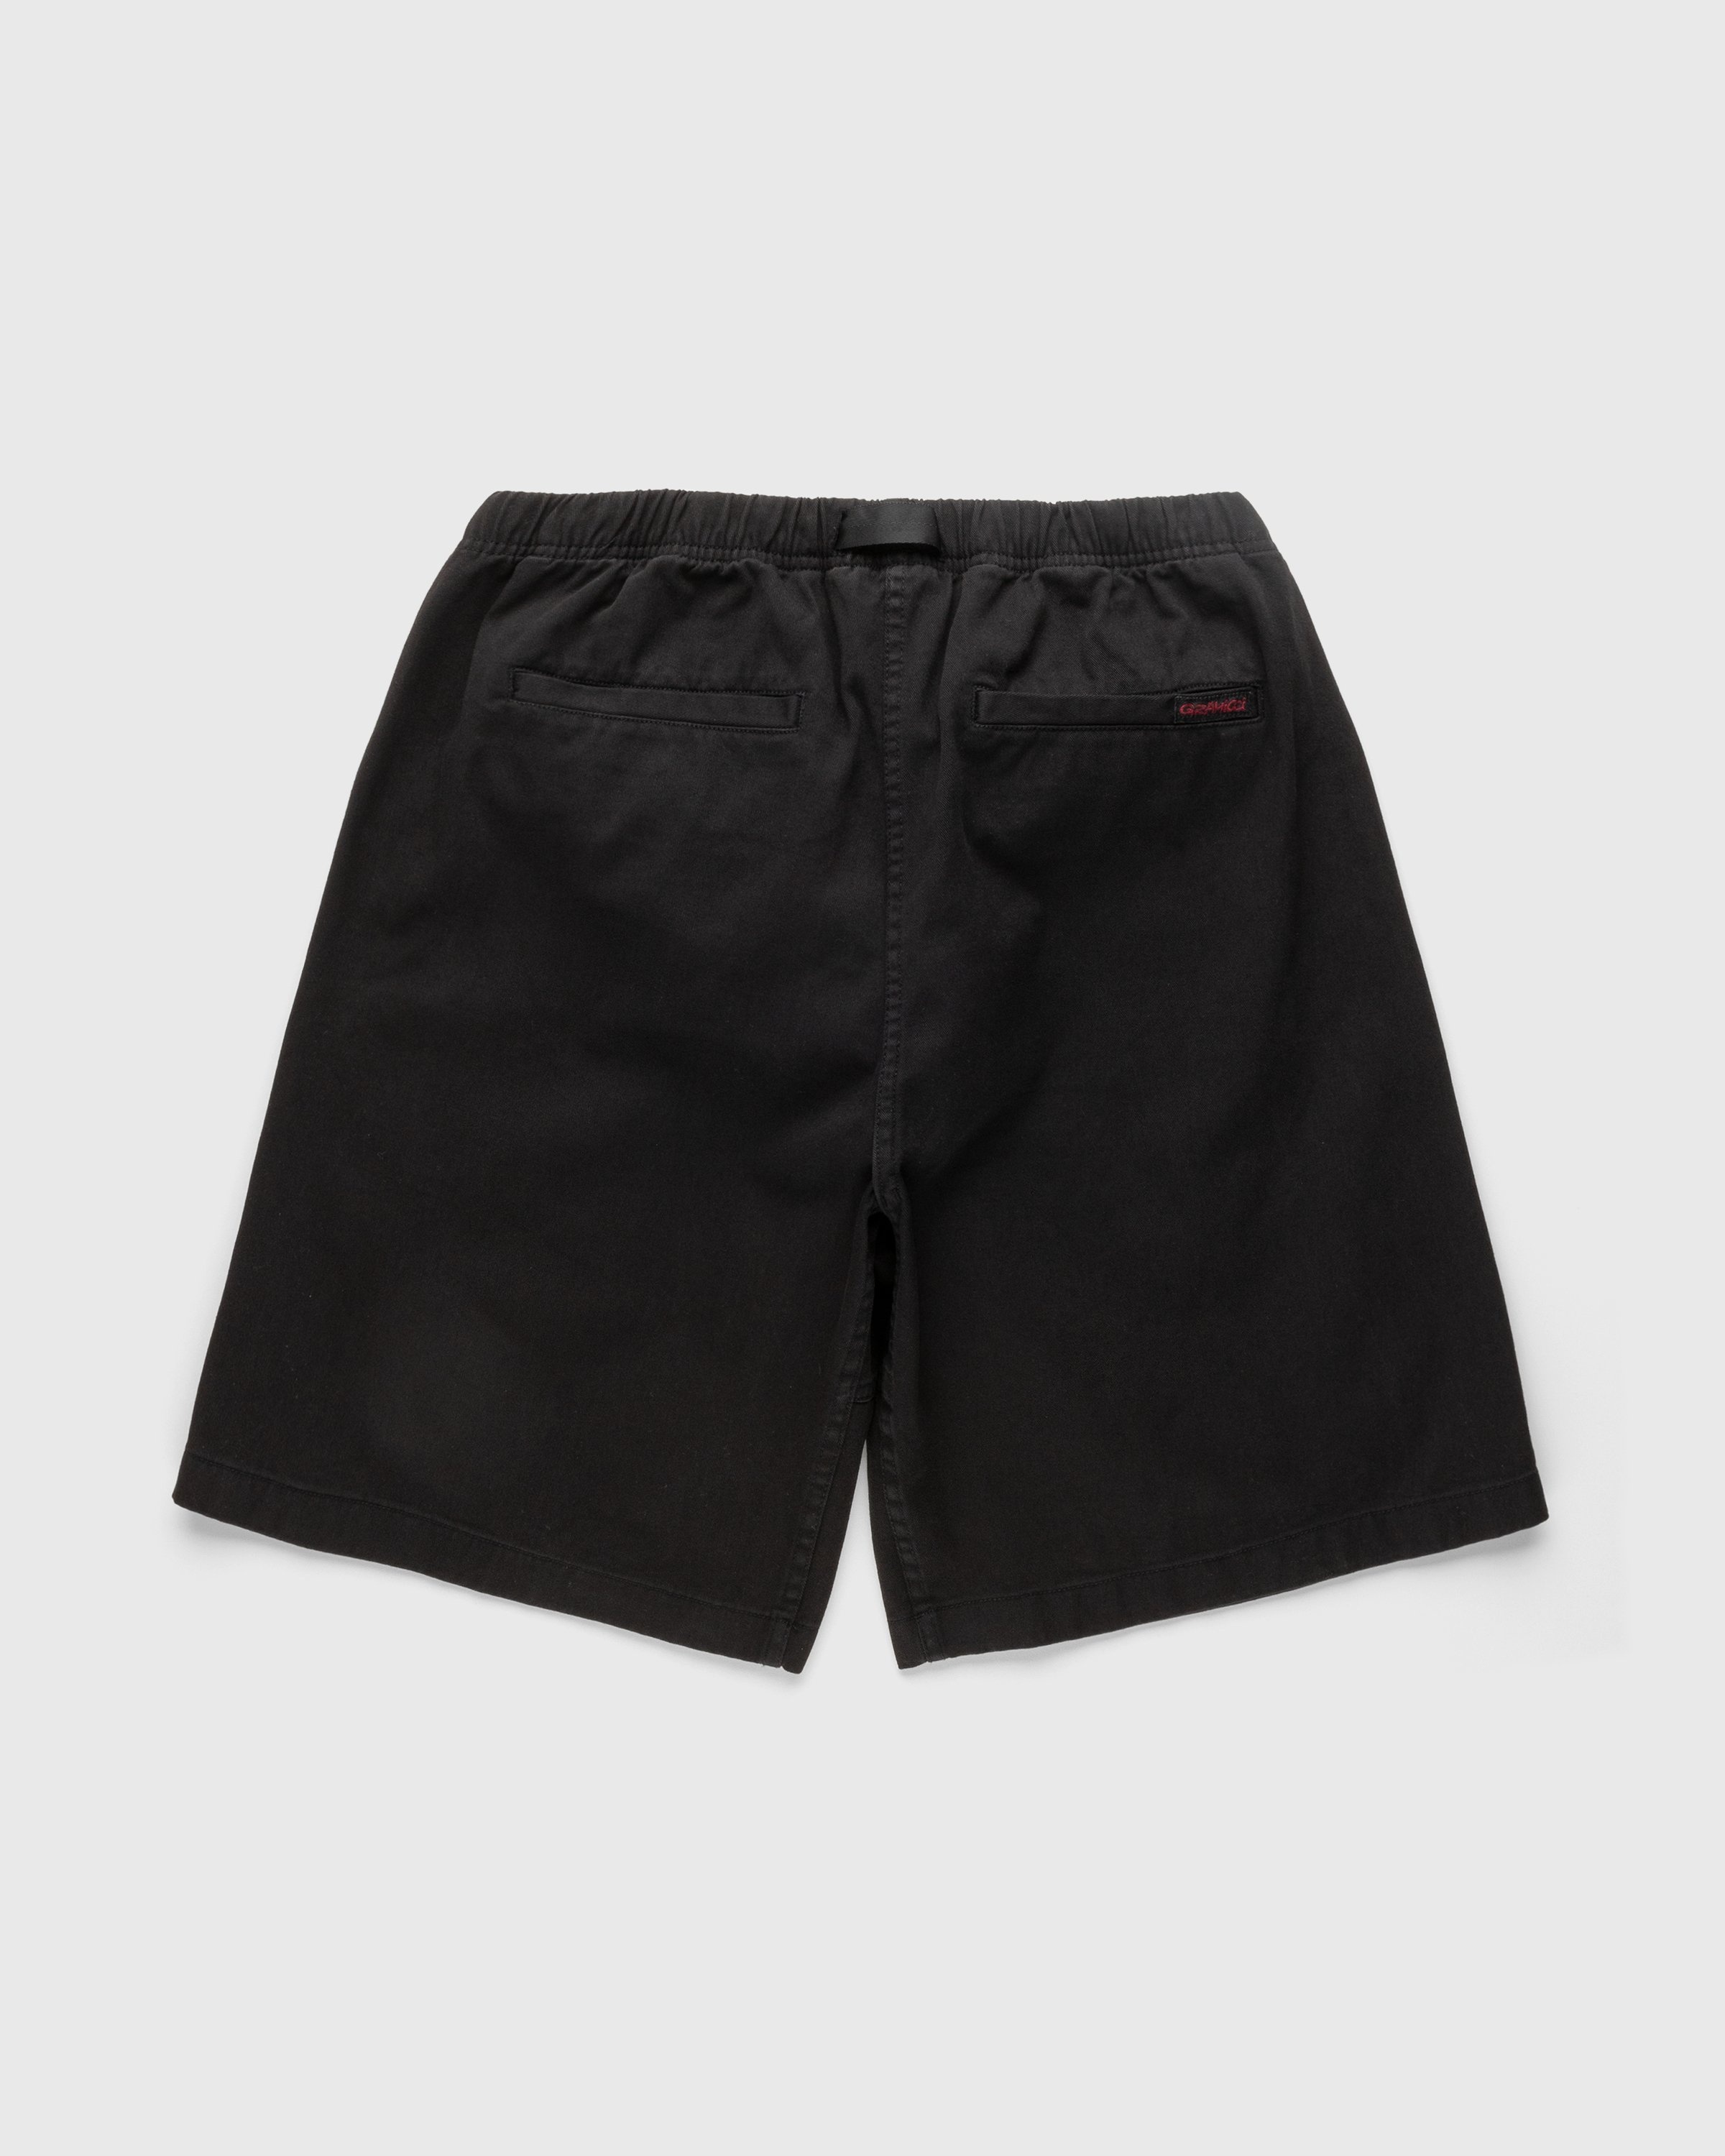 Gramicci – G-Shorts Black - Bermuda Cuts - Black - Image 2